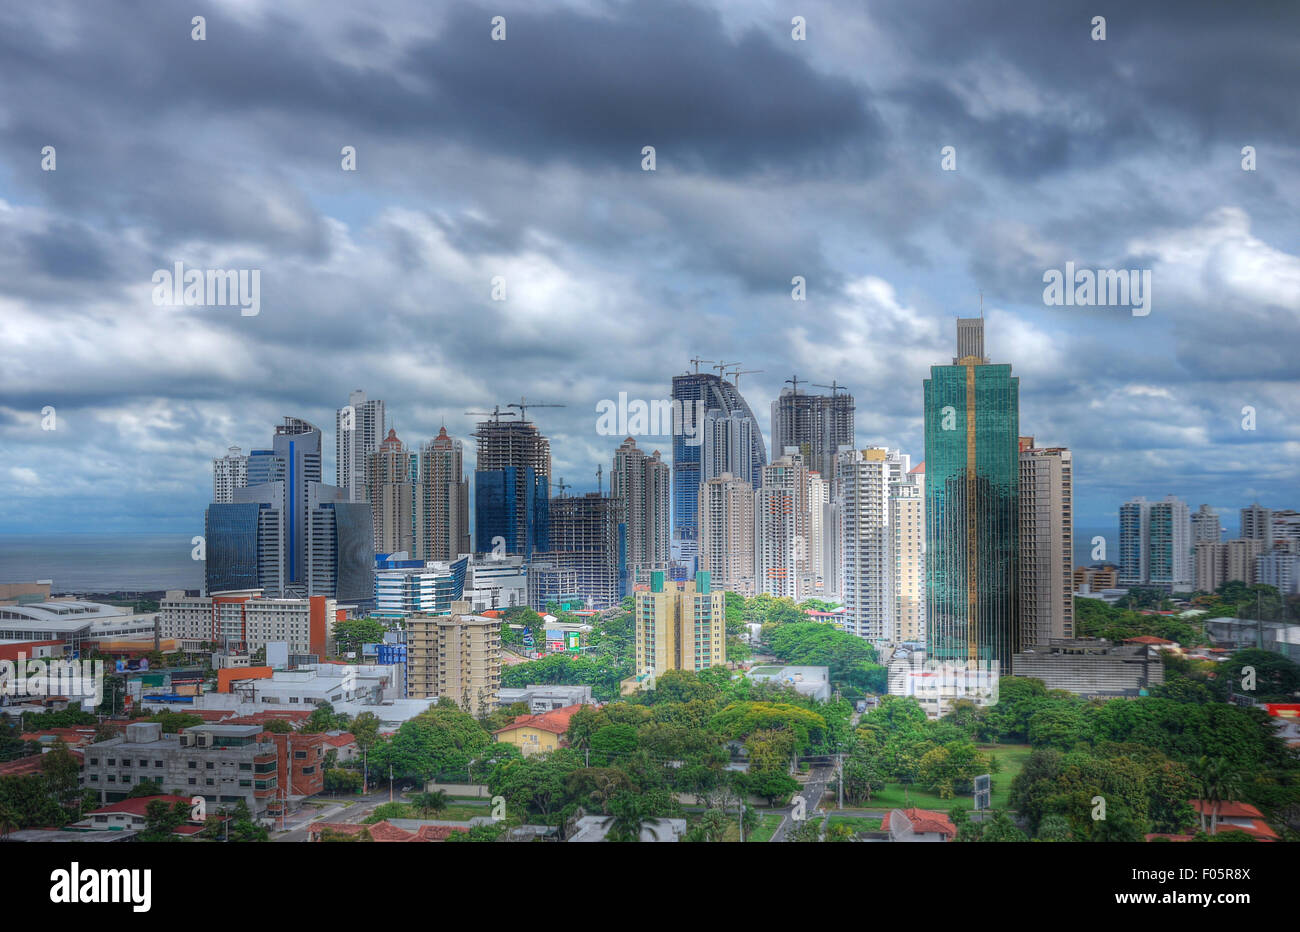 Panama City skyline with a very dramatic sky Stock Photo